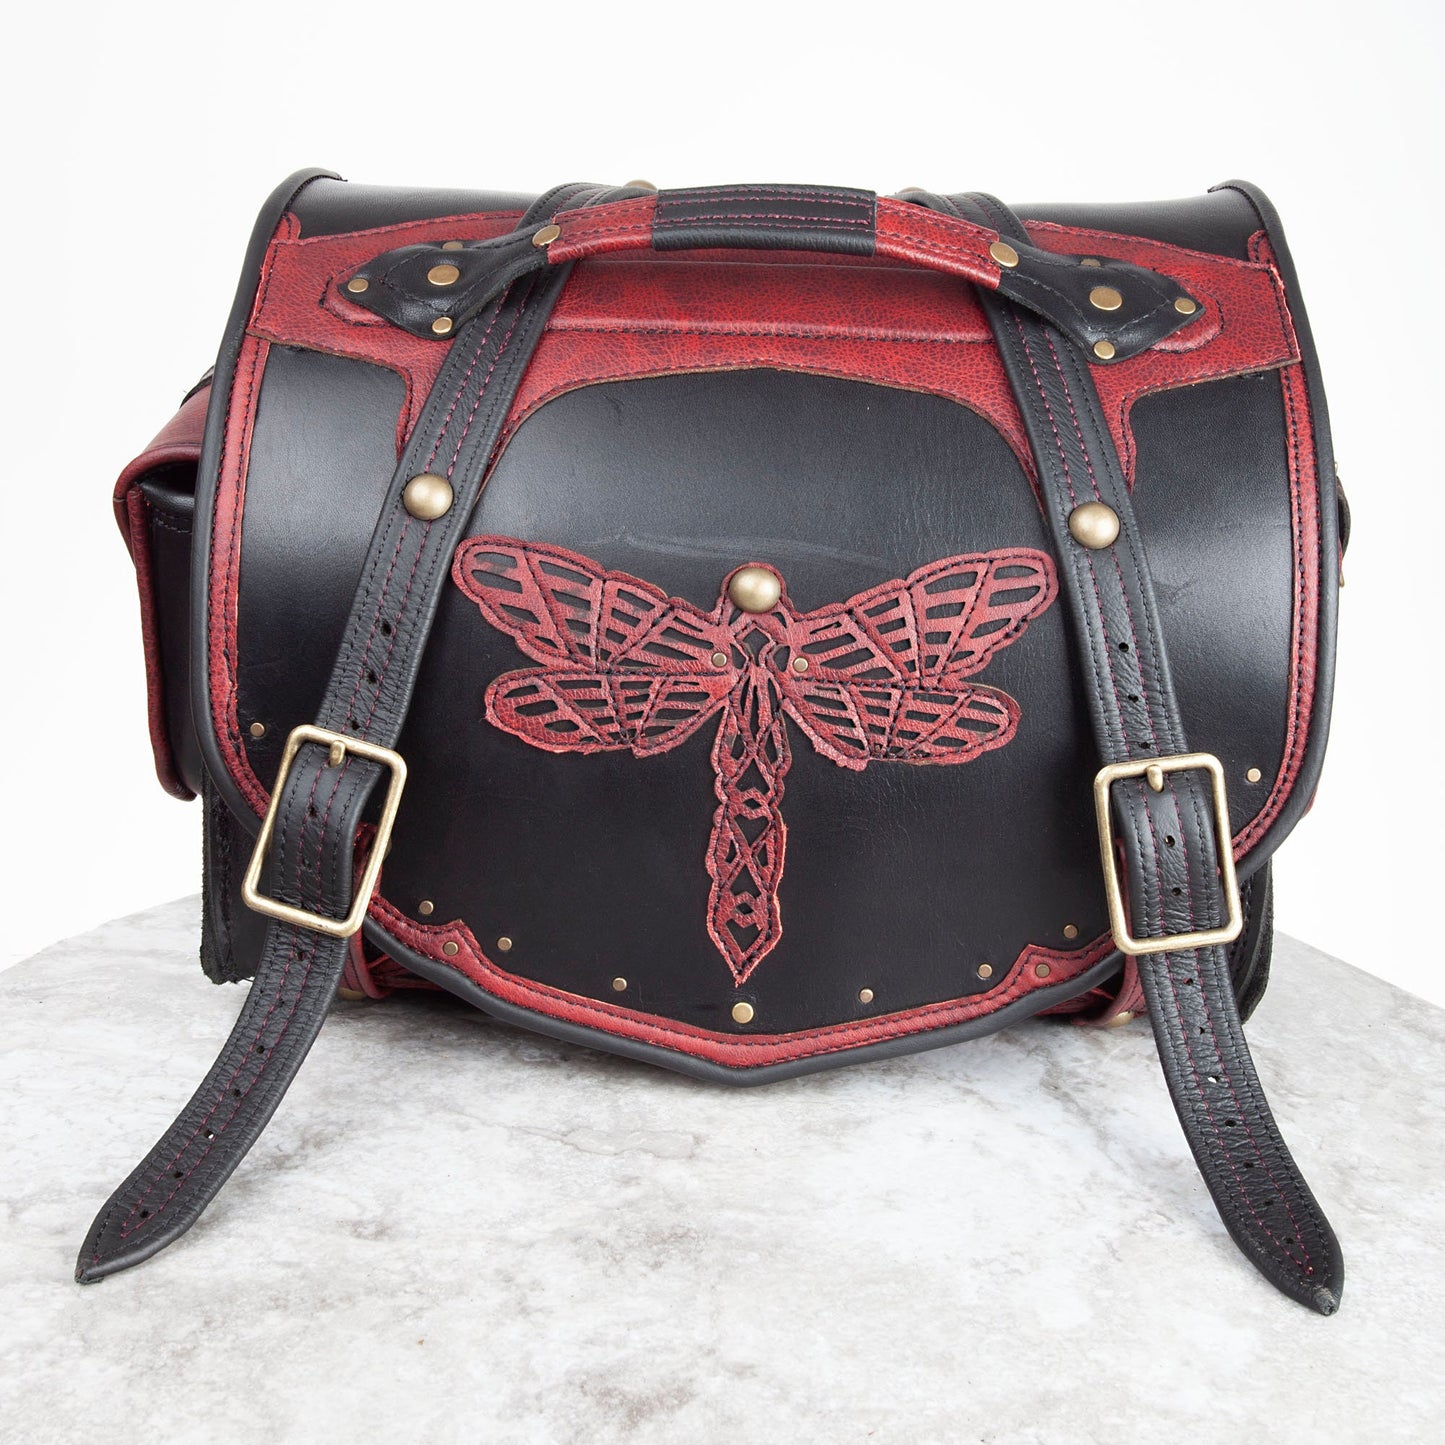 Odonata Motorcycle Saddle Bag | Made To Order